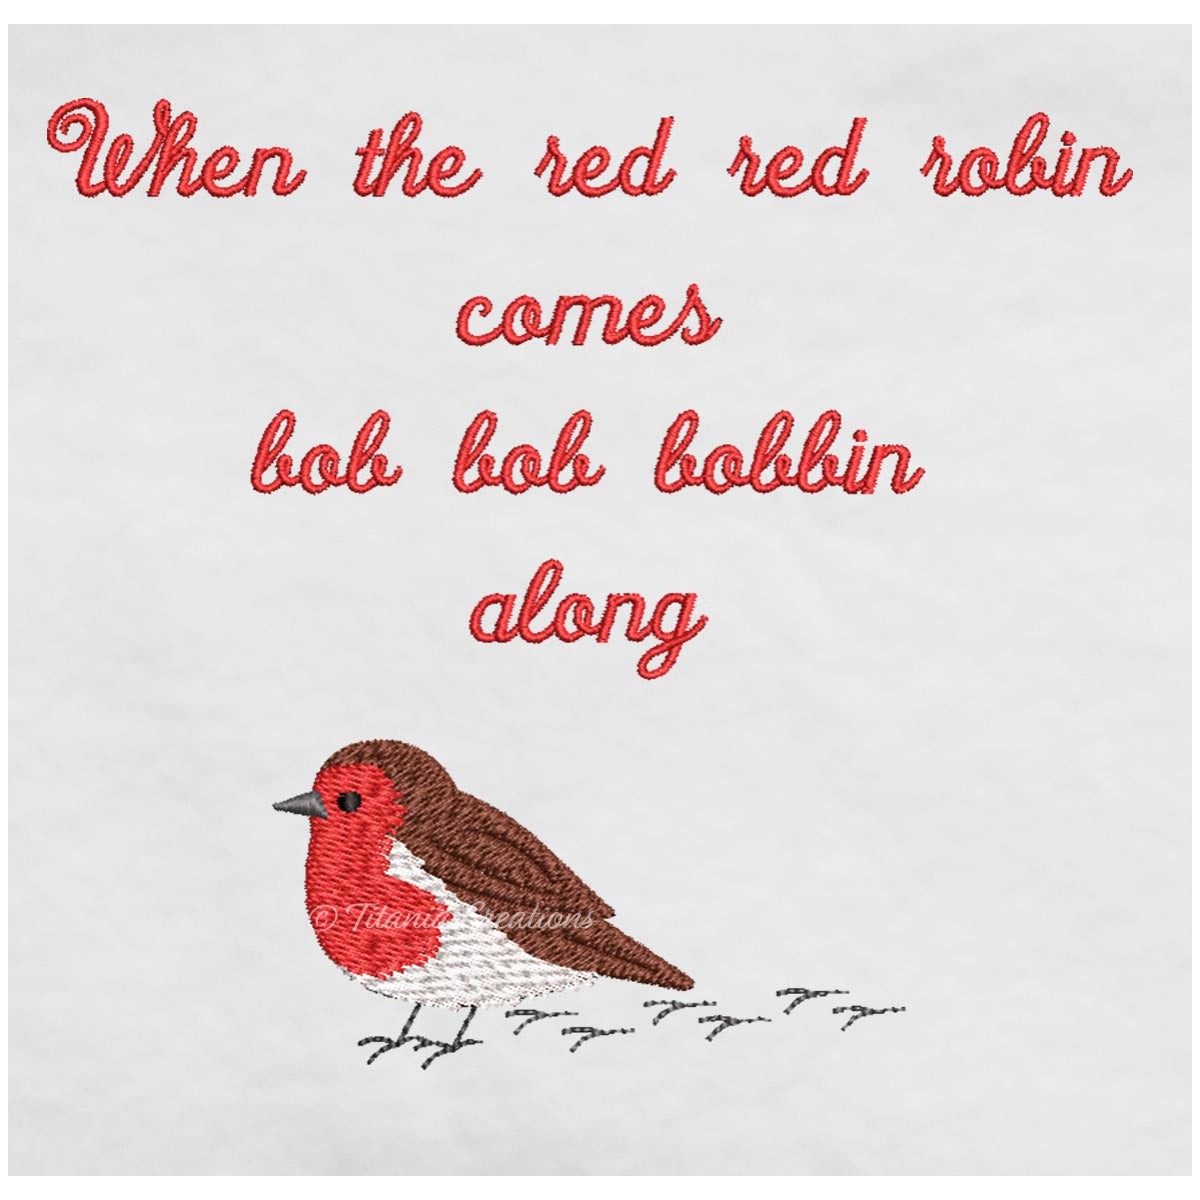 Red Red Robin Bobbin Along 4x4 5x7